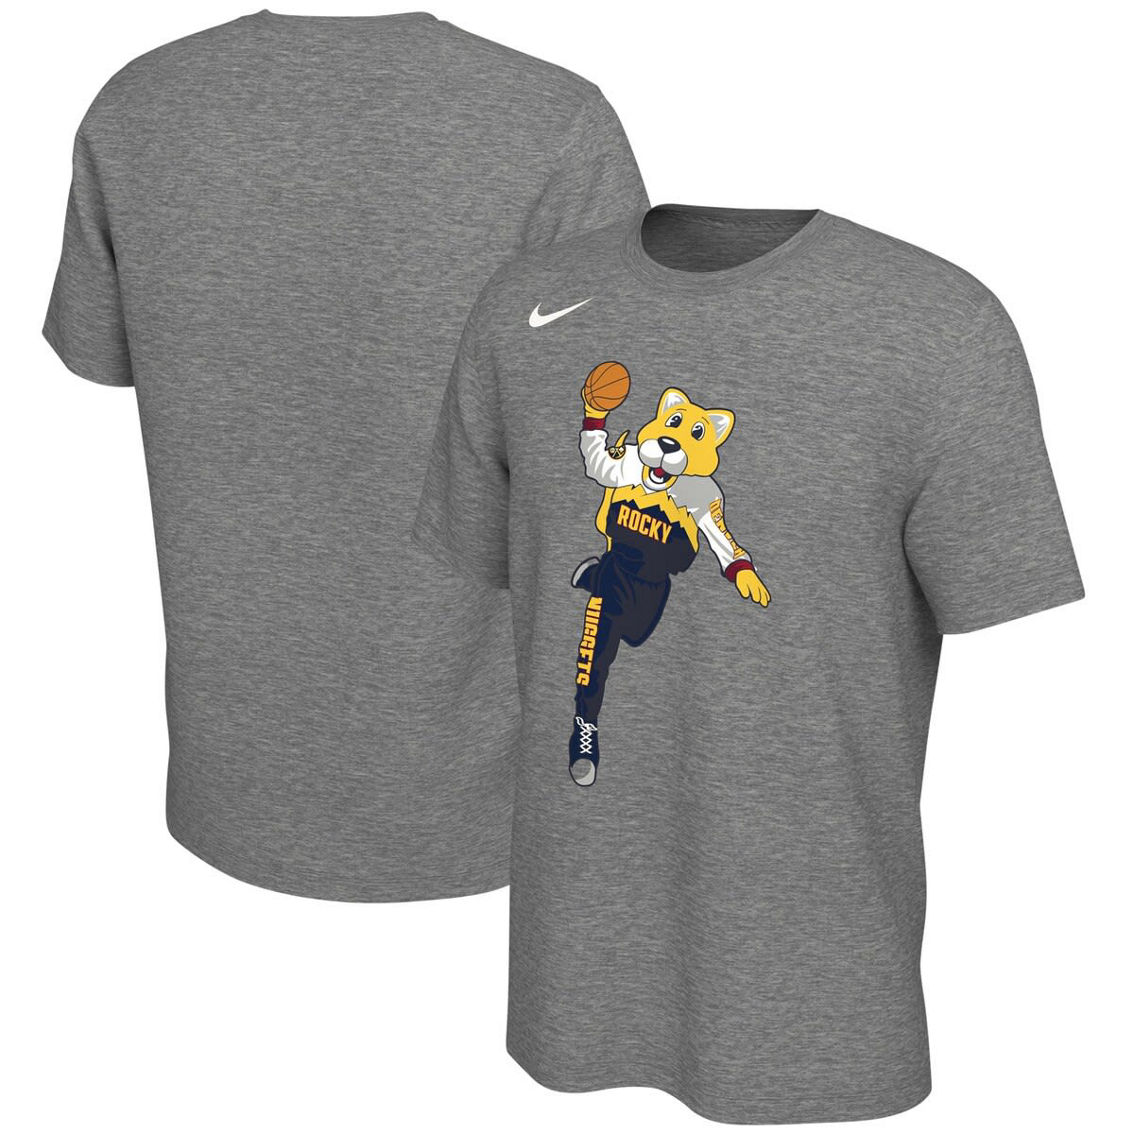 Nike Unisex Heather Charcoal Denver Nuggets Team Mascot T-Shirt - Image 2 of 4